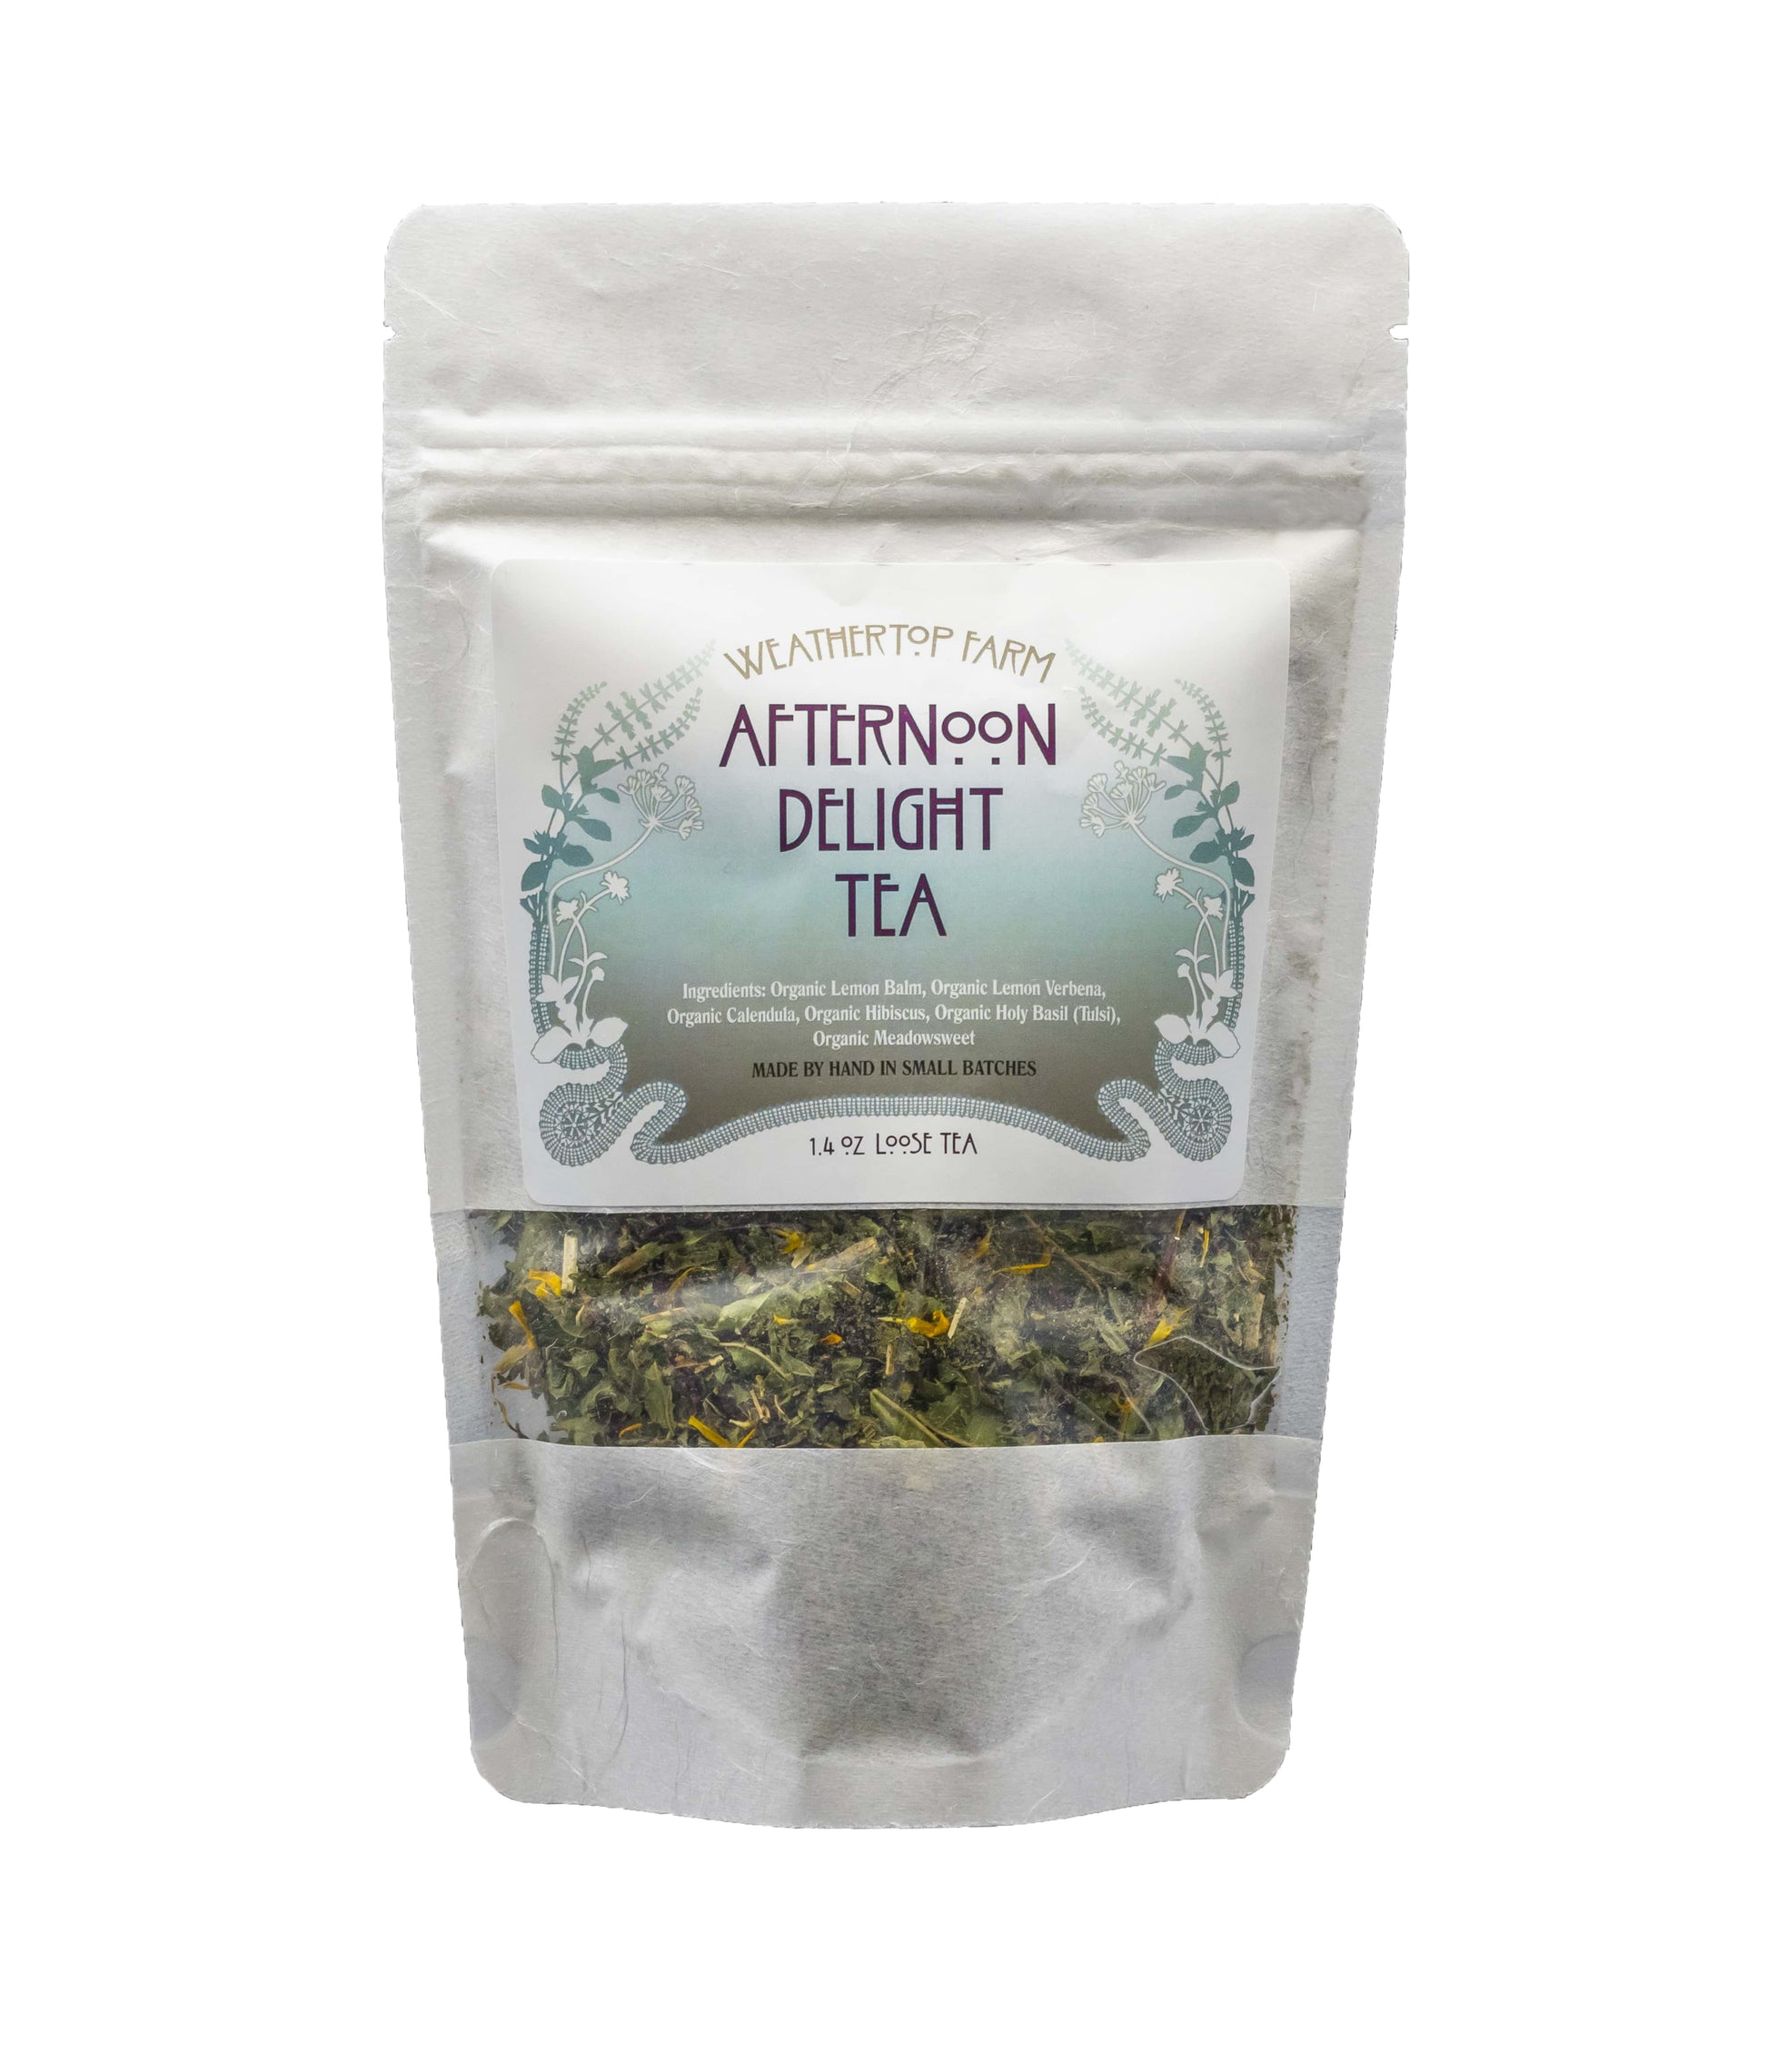 Buy wholesale Organic verbena infusion - Organic herbal teas and